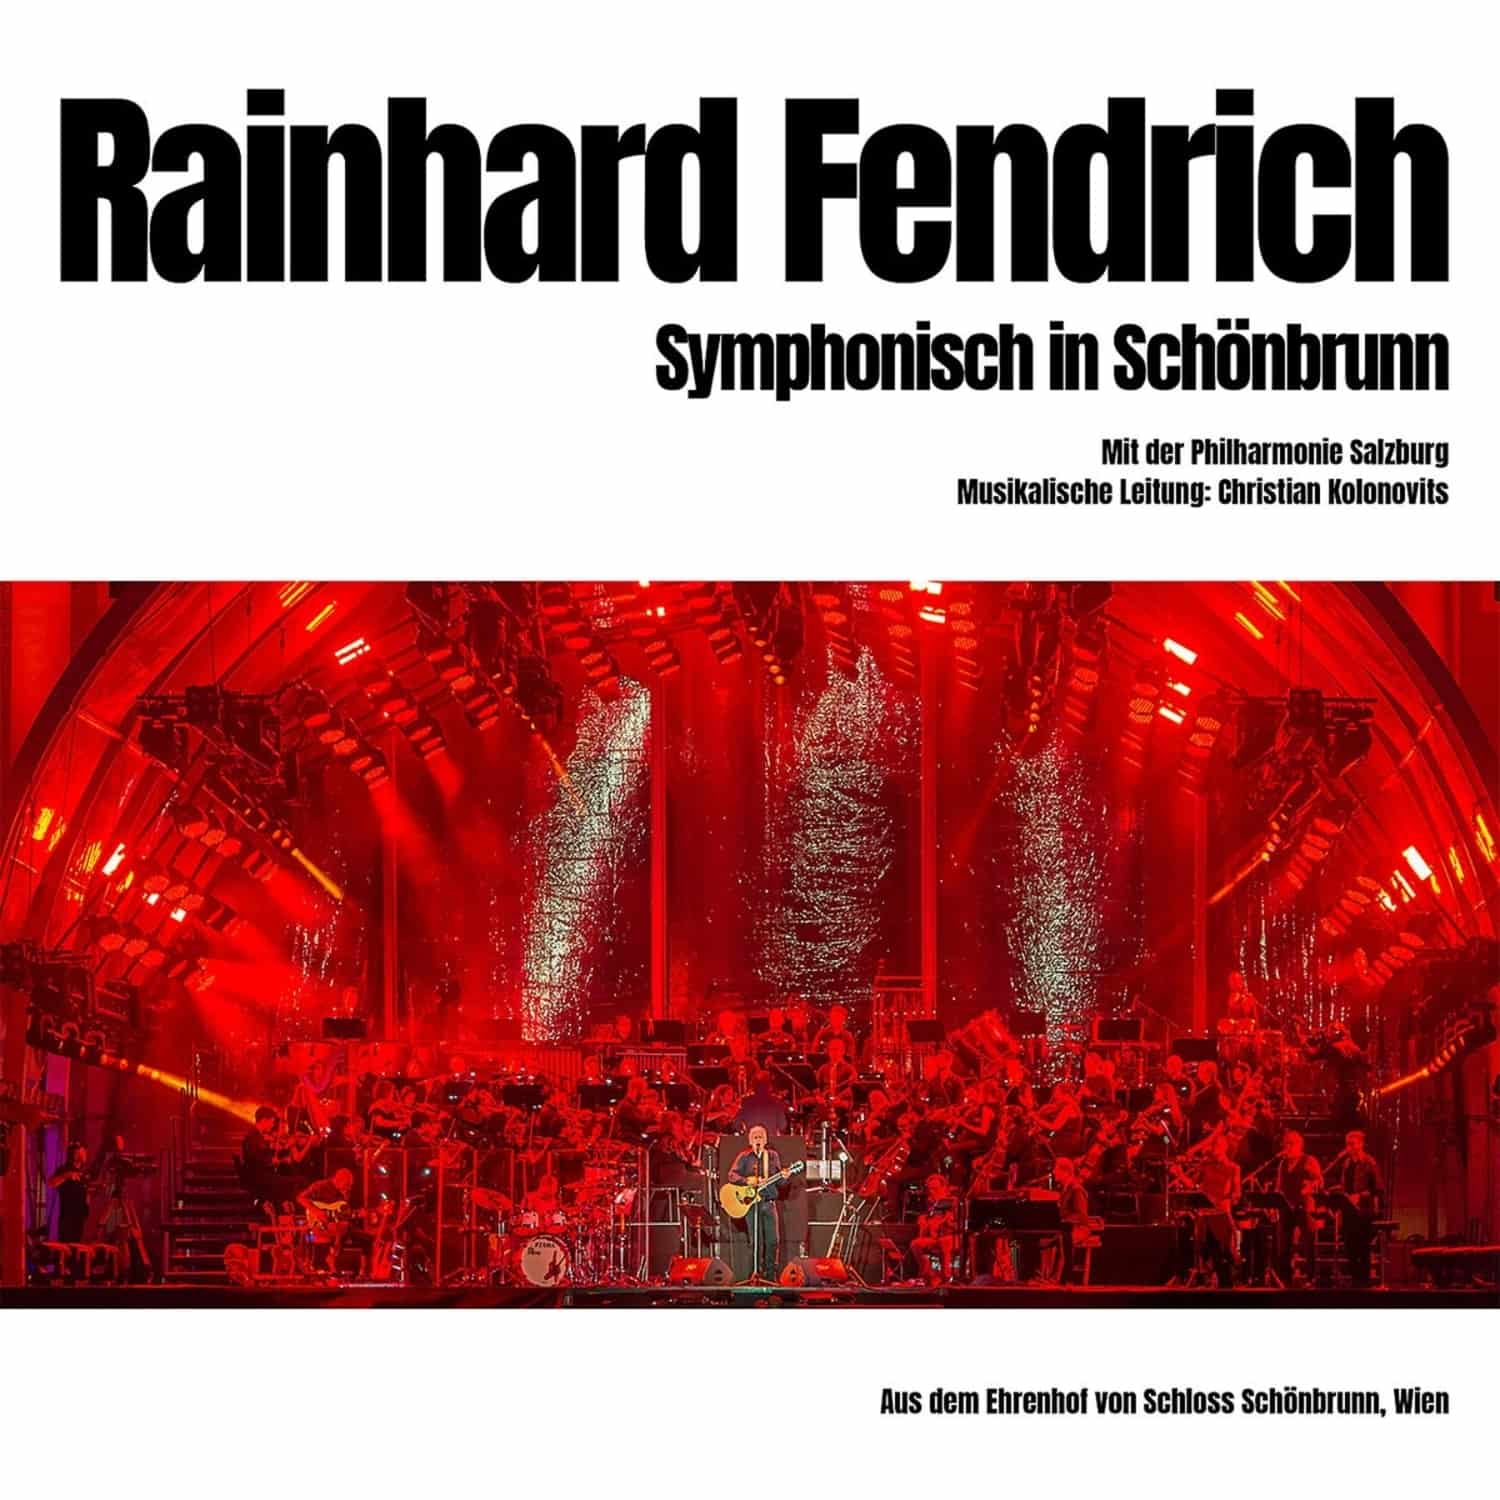 Rainhard Fendrich - SYMPHONISCH IN SCHNBRUNN 